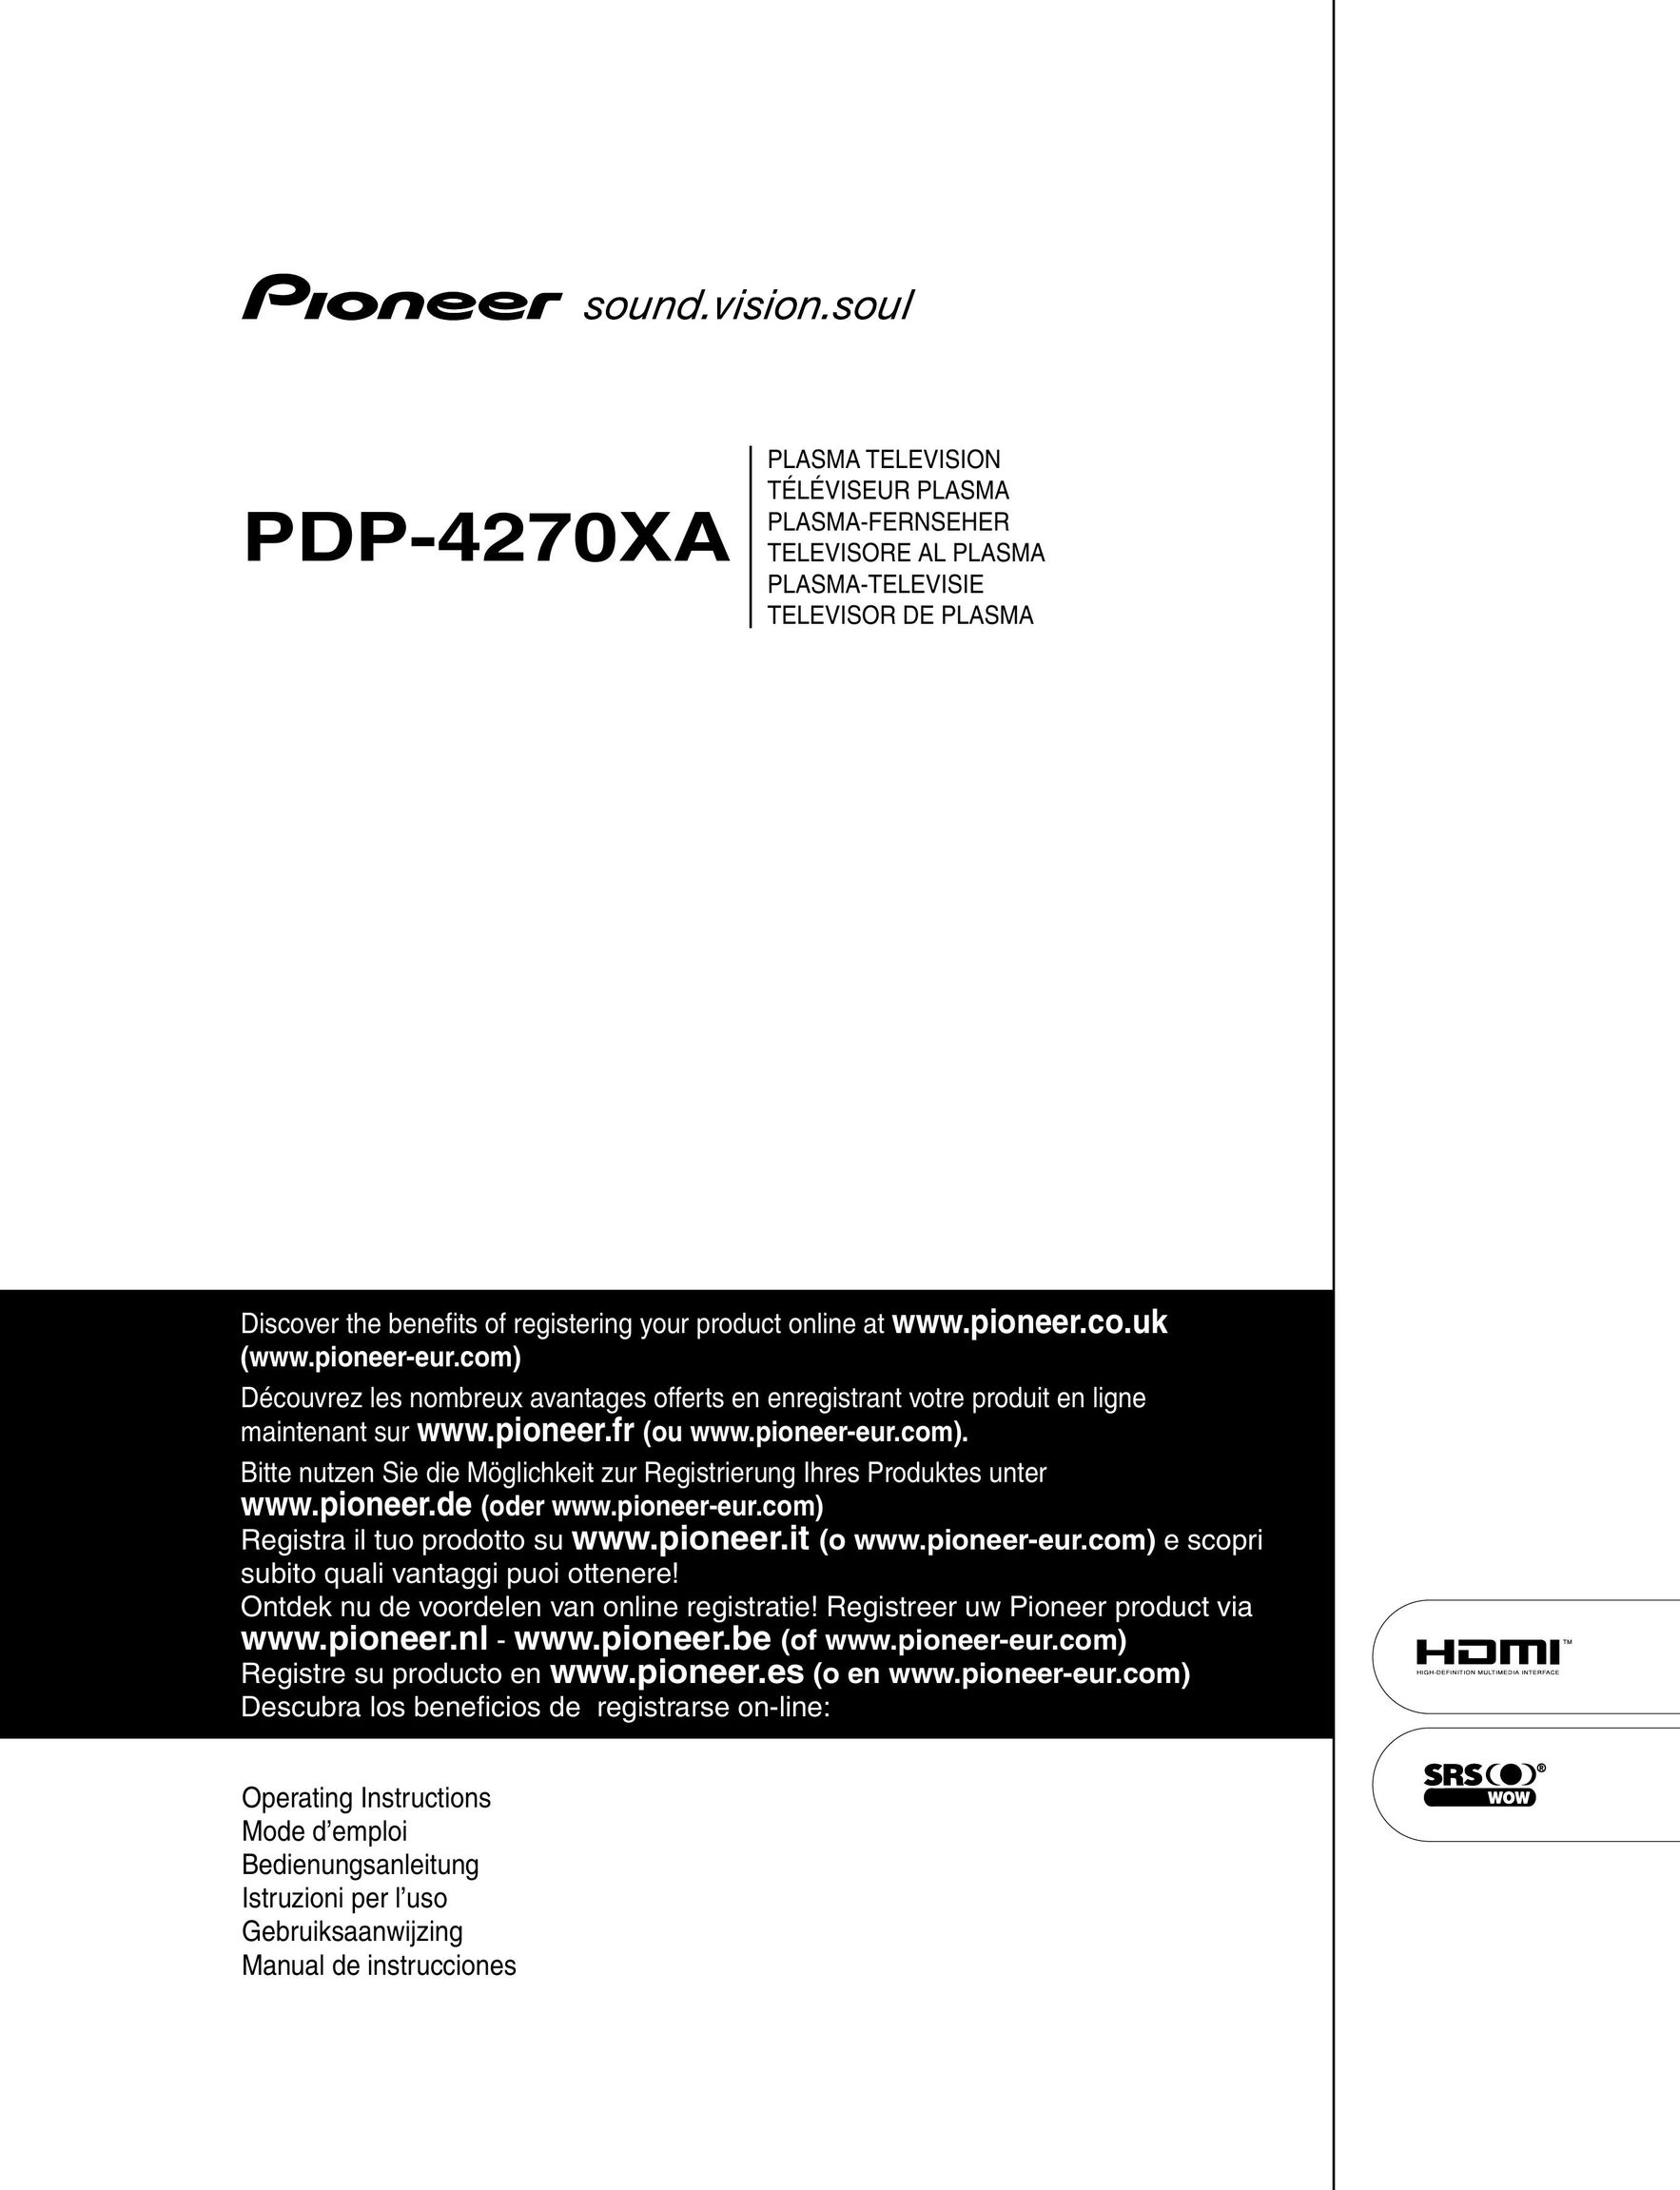 Pioneer PDP-4270XA Flat Panel Television User Manual